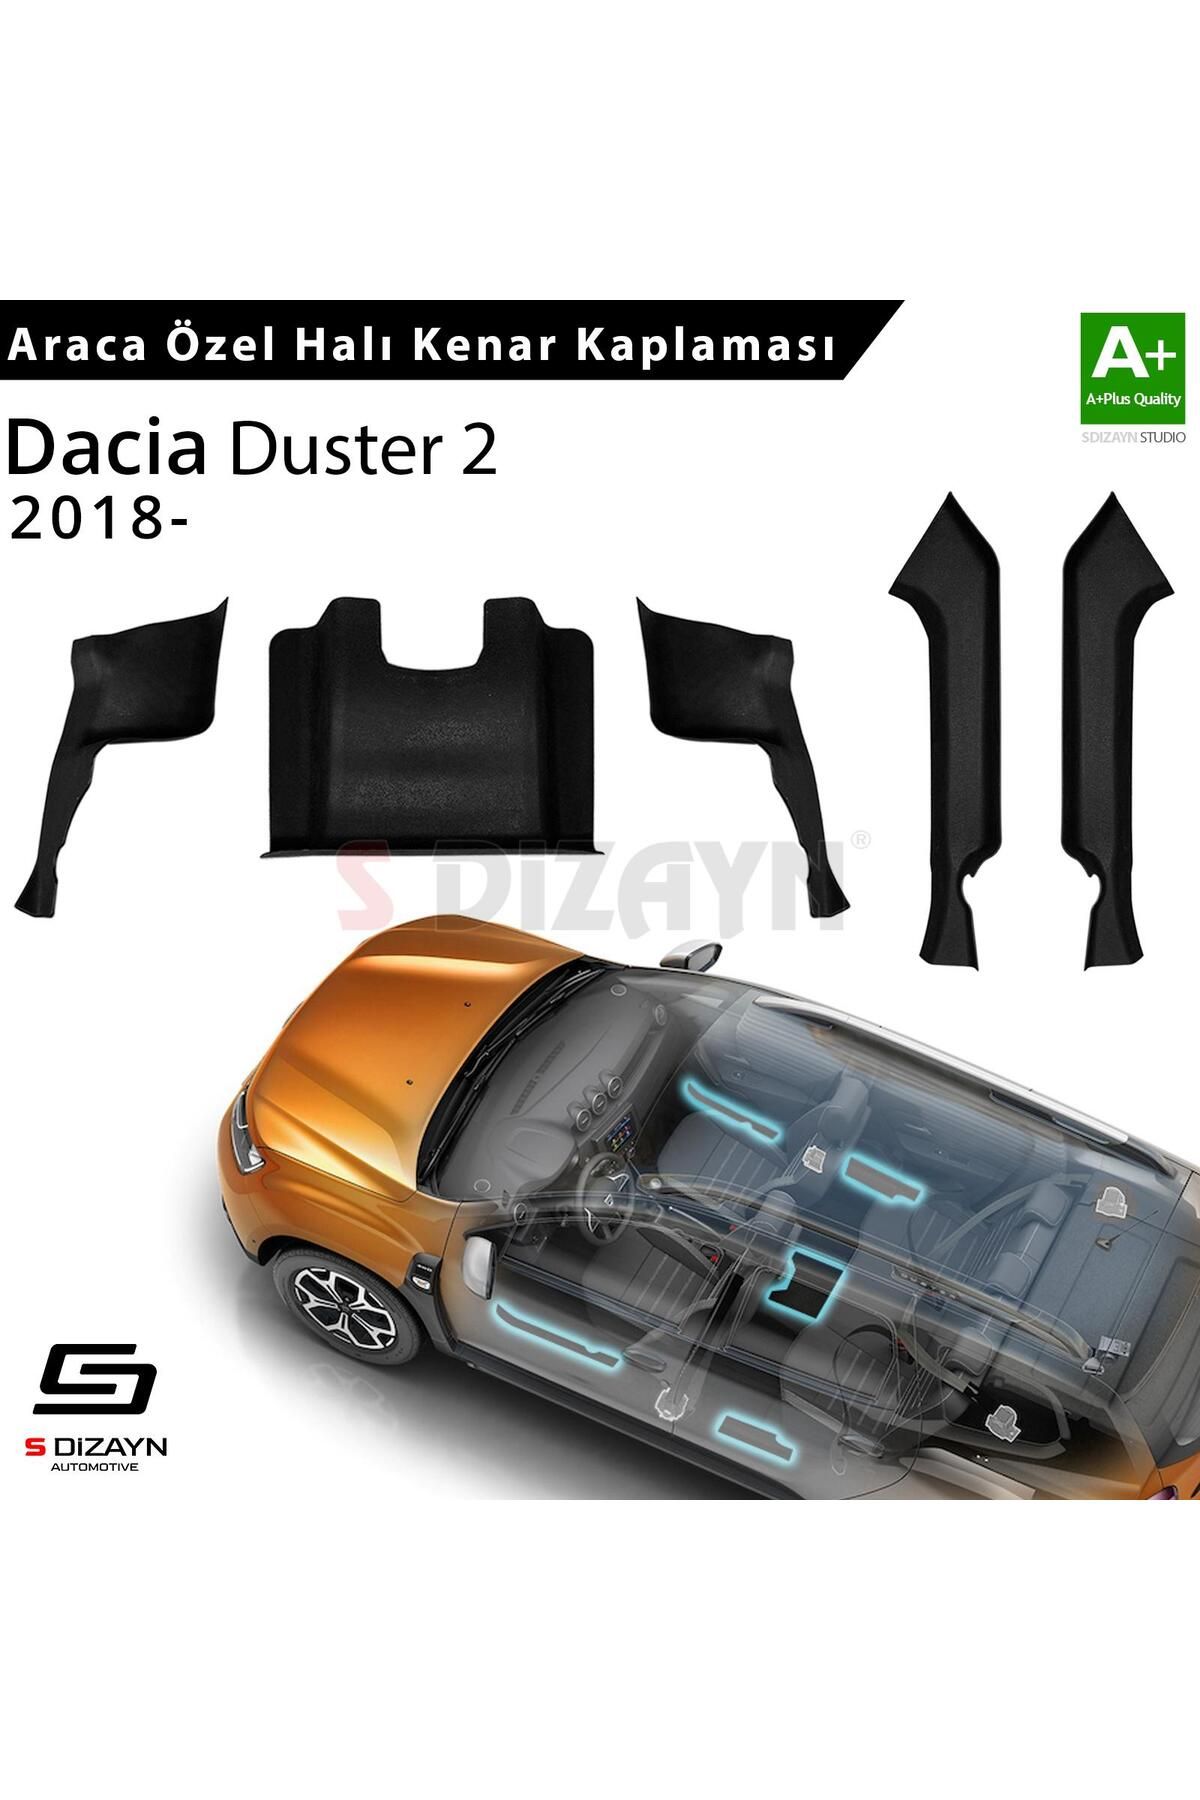 S Dizayn S-Dizayn Dacia Duster 2 Halı Kenar Kaplama Seti 2018 Üzeri A+ Kalite